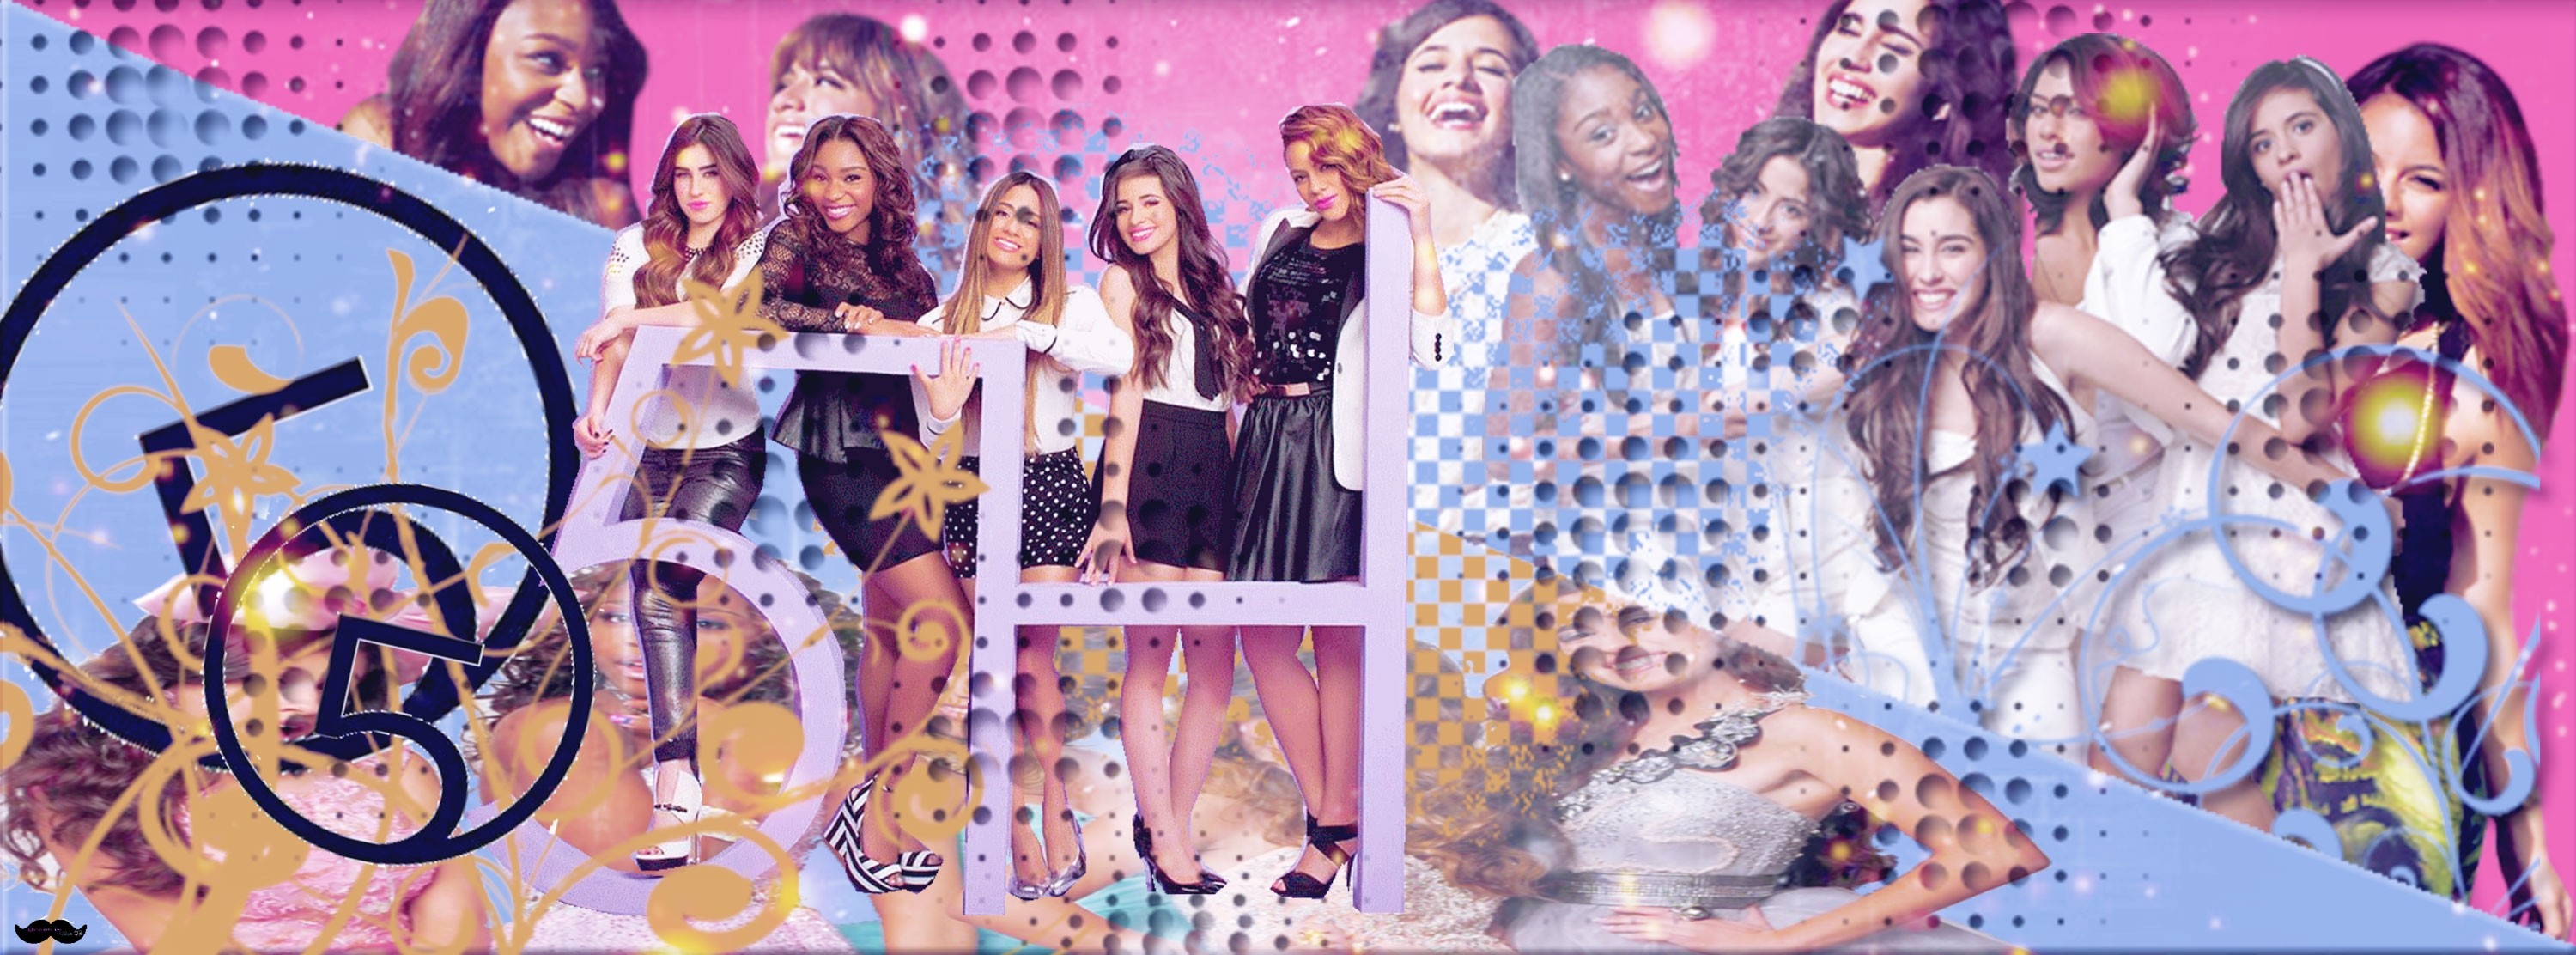 3000x1112 Portada Fifth Harmony by JunaMalik Portada Fifth Harmony by JunaMalik